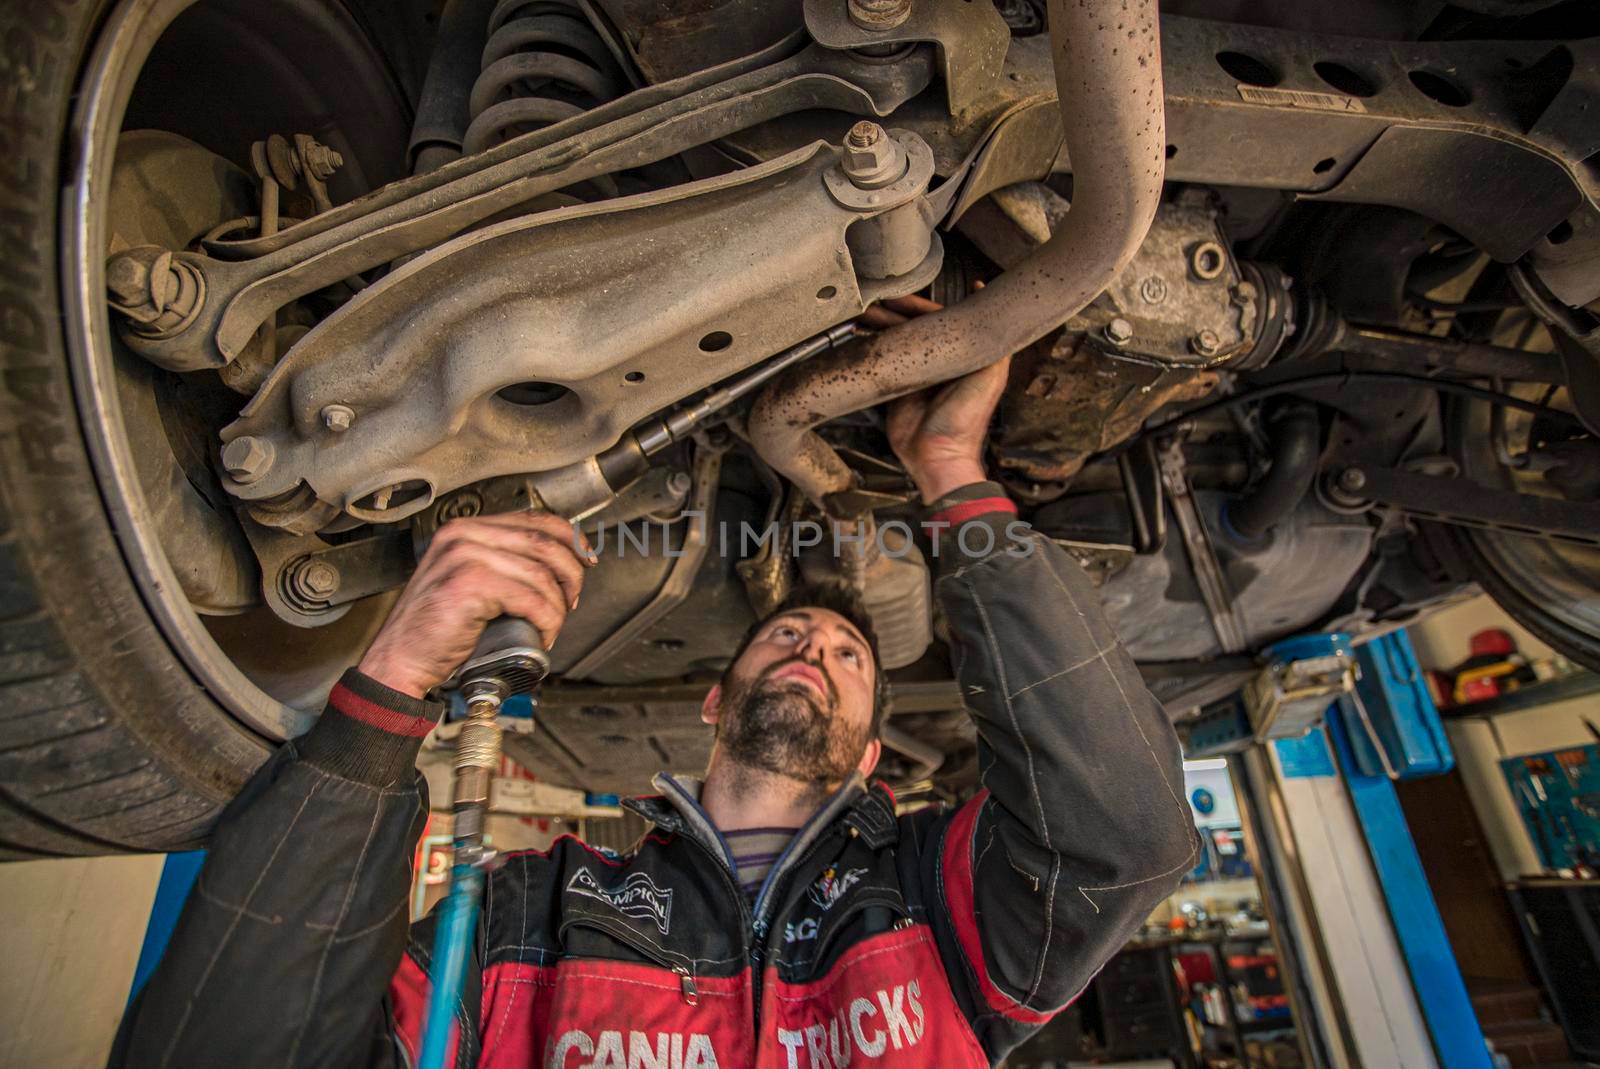 MILAN, ITALY 28 MARCH 2021: Mechanic repairs the car